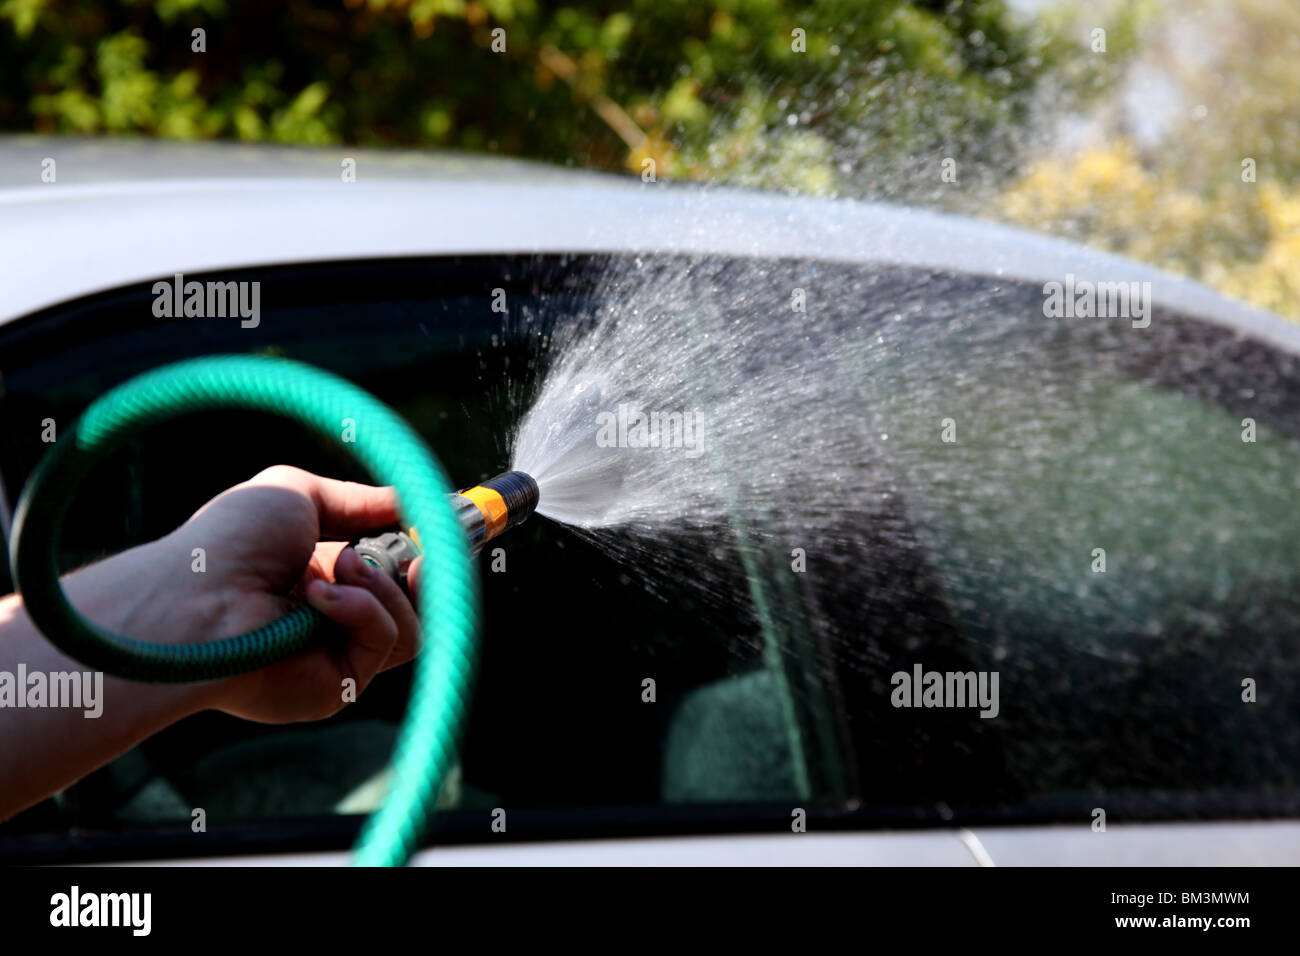 washing a car Stock Photo